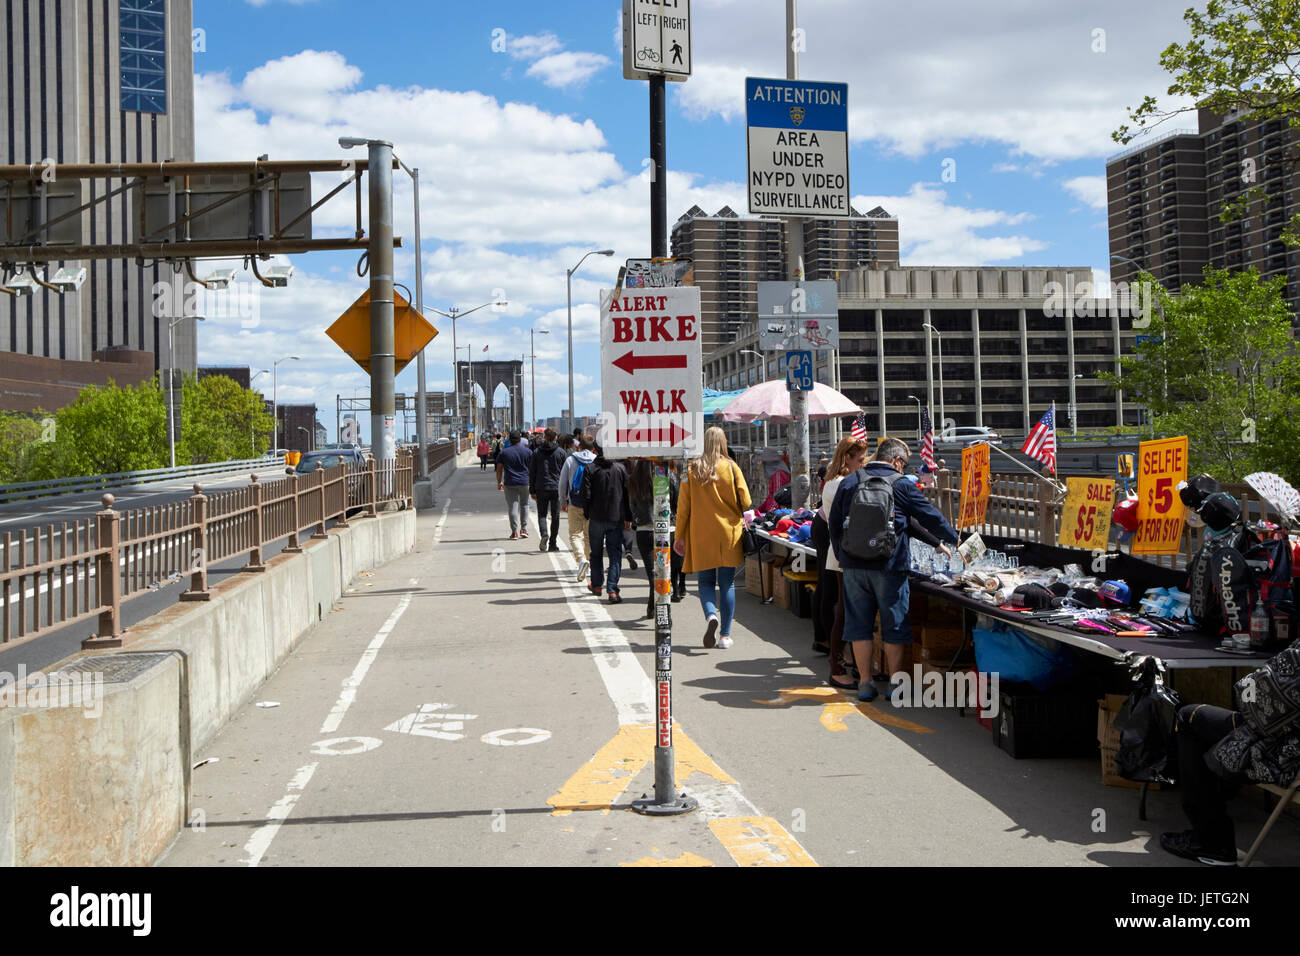 bike lane and walk lane at entrance to brooklyn bridge path New York City USA Stock Photo